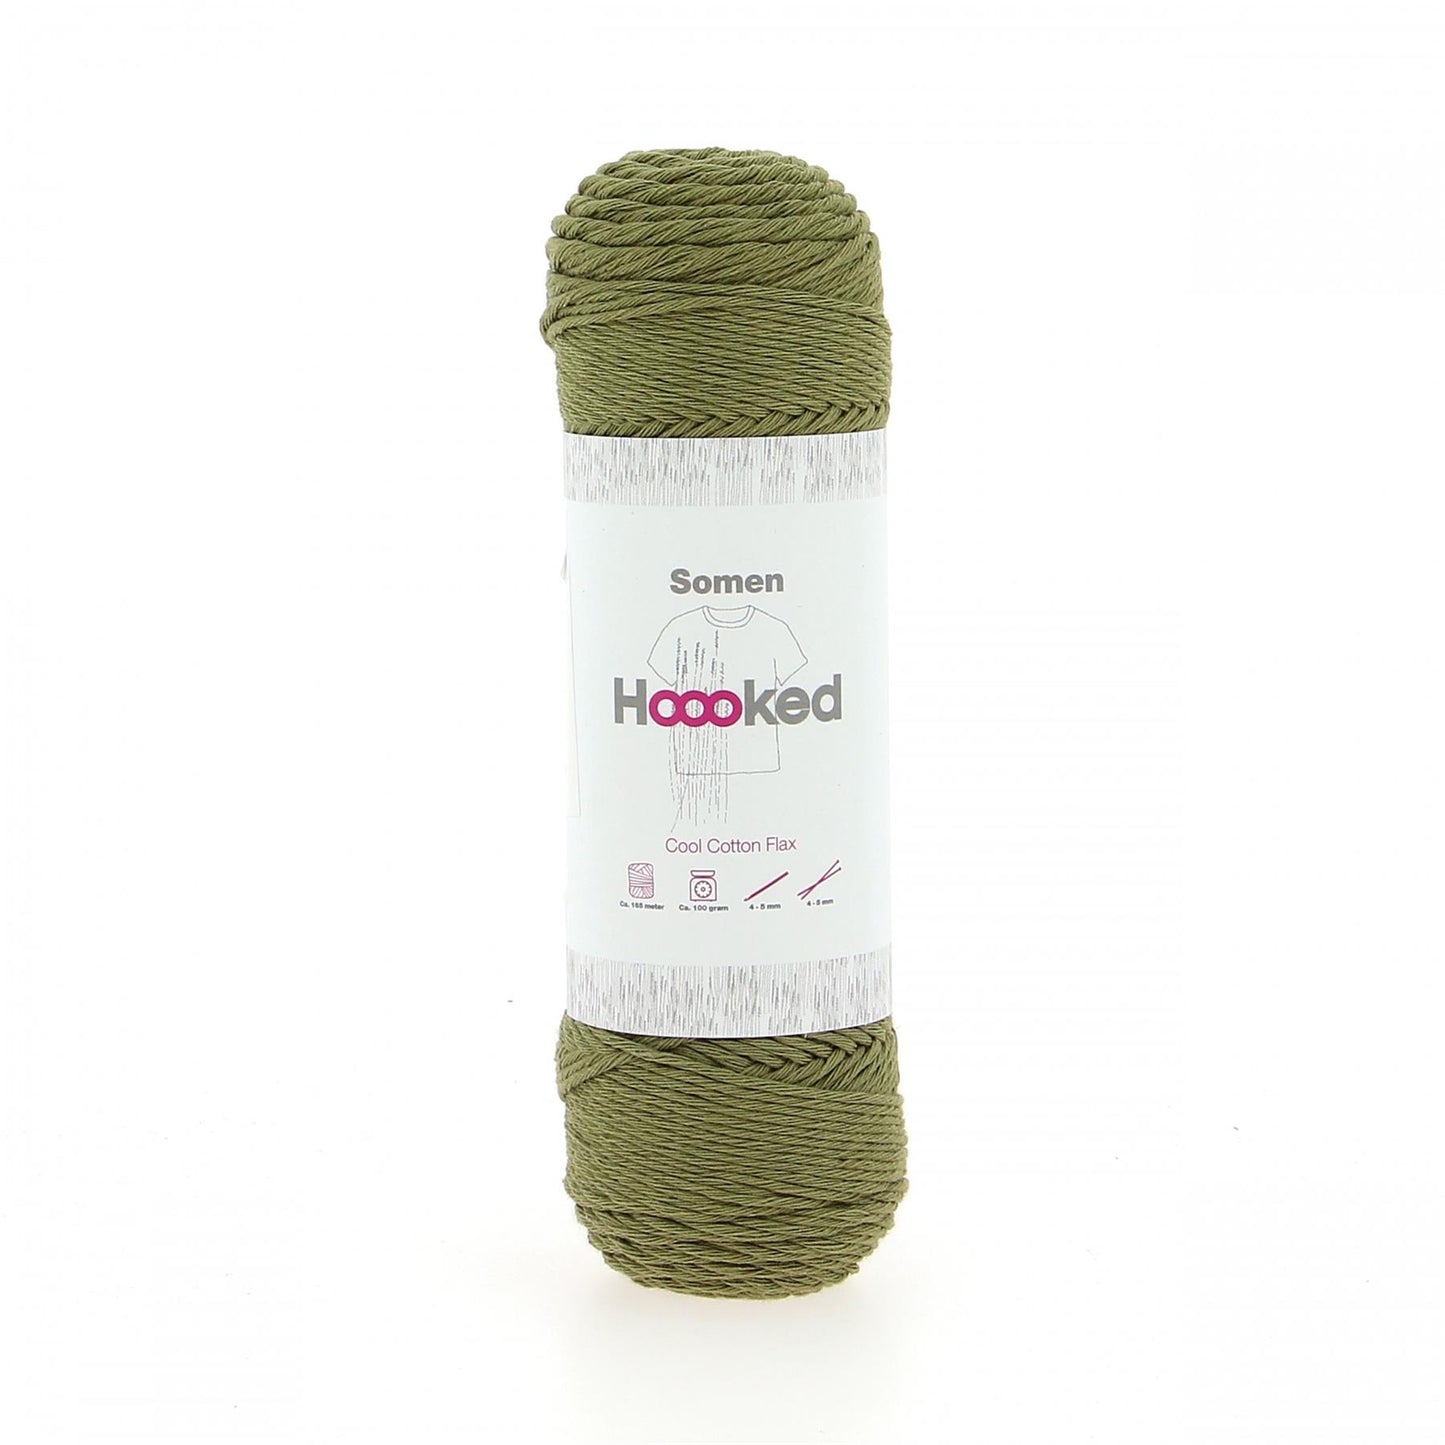 Hoooked Somen Avocado Cotton/Linen Blend Yarn - 165M 100g